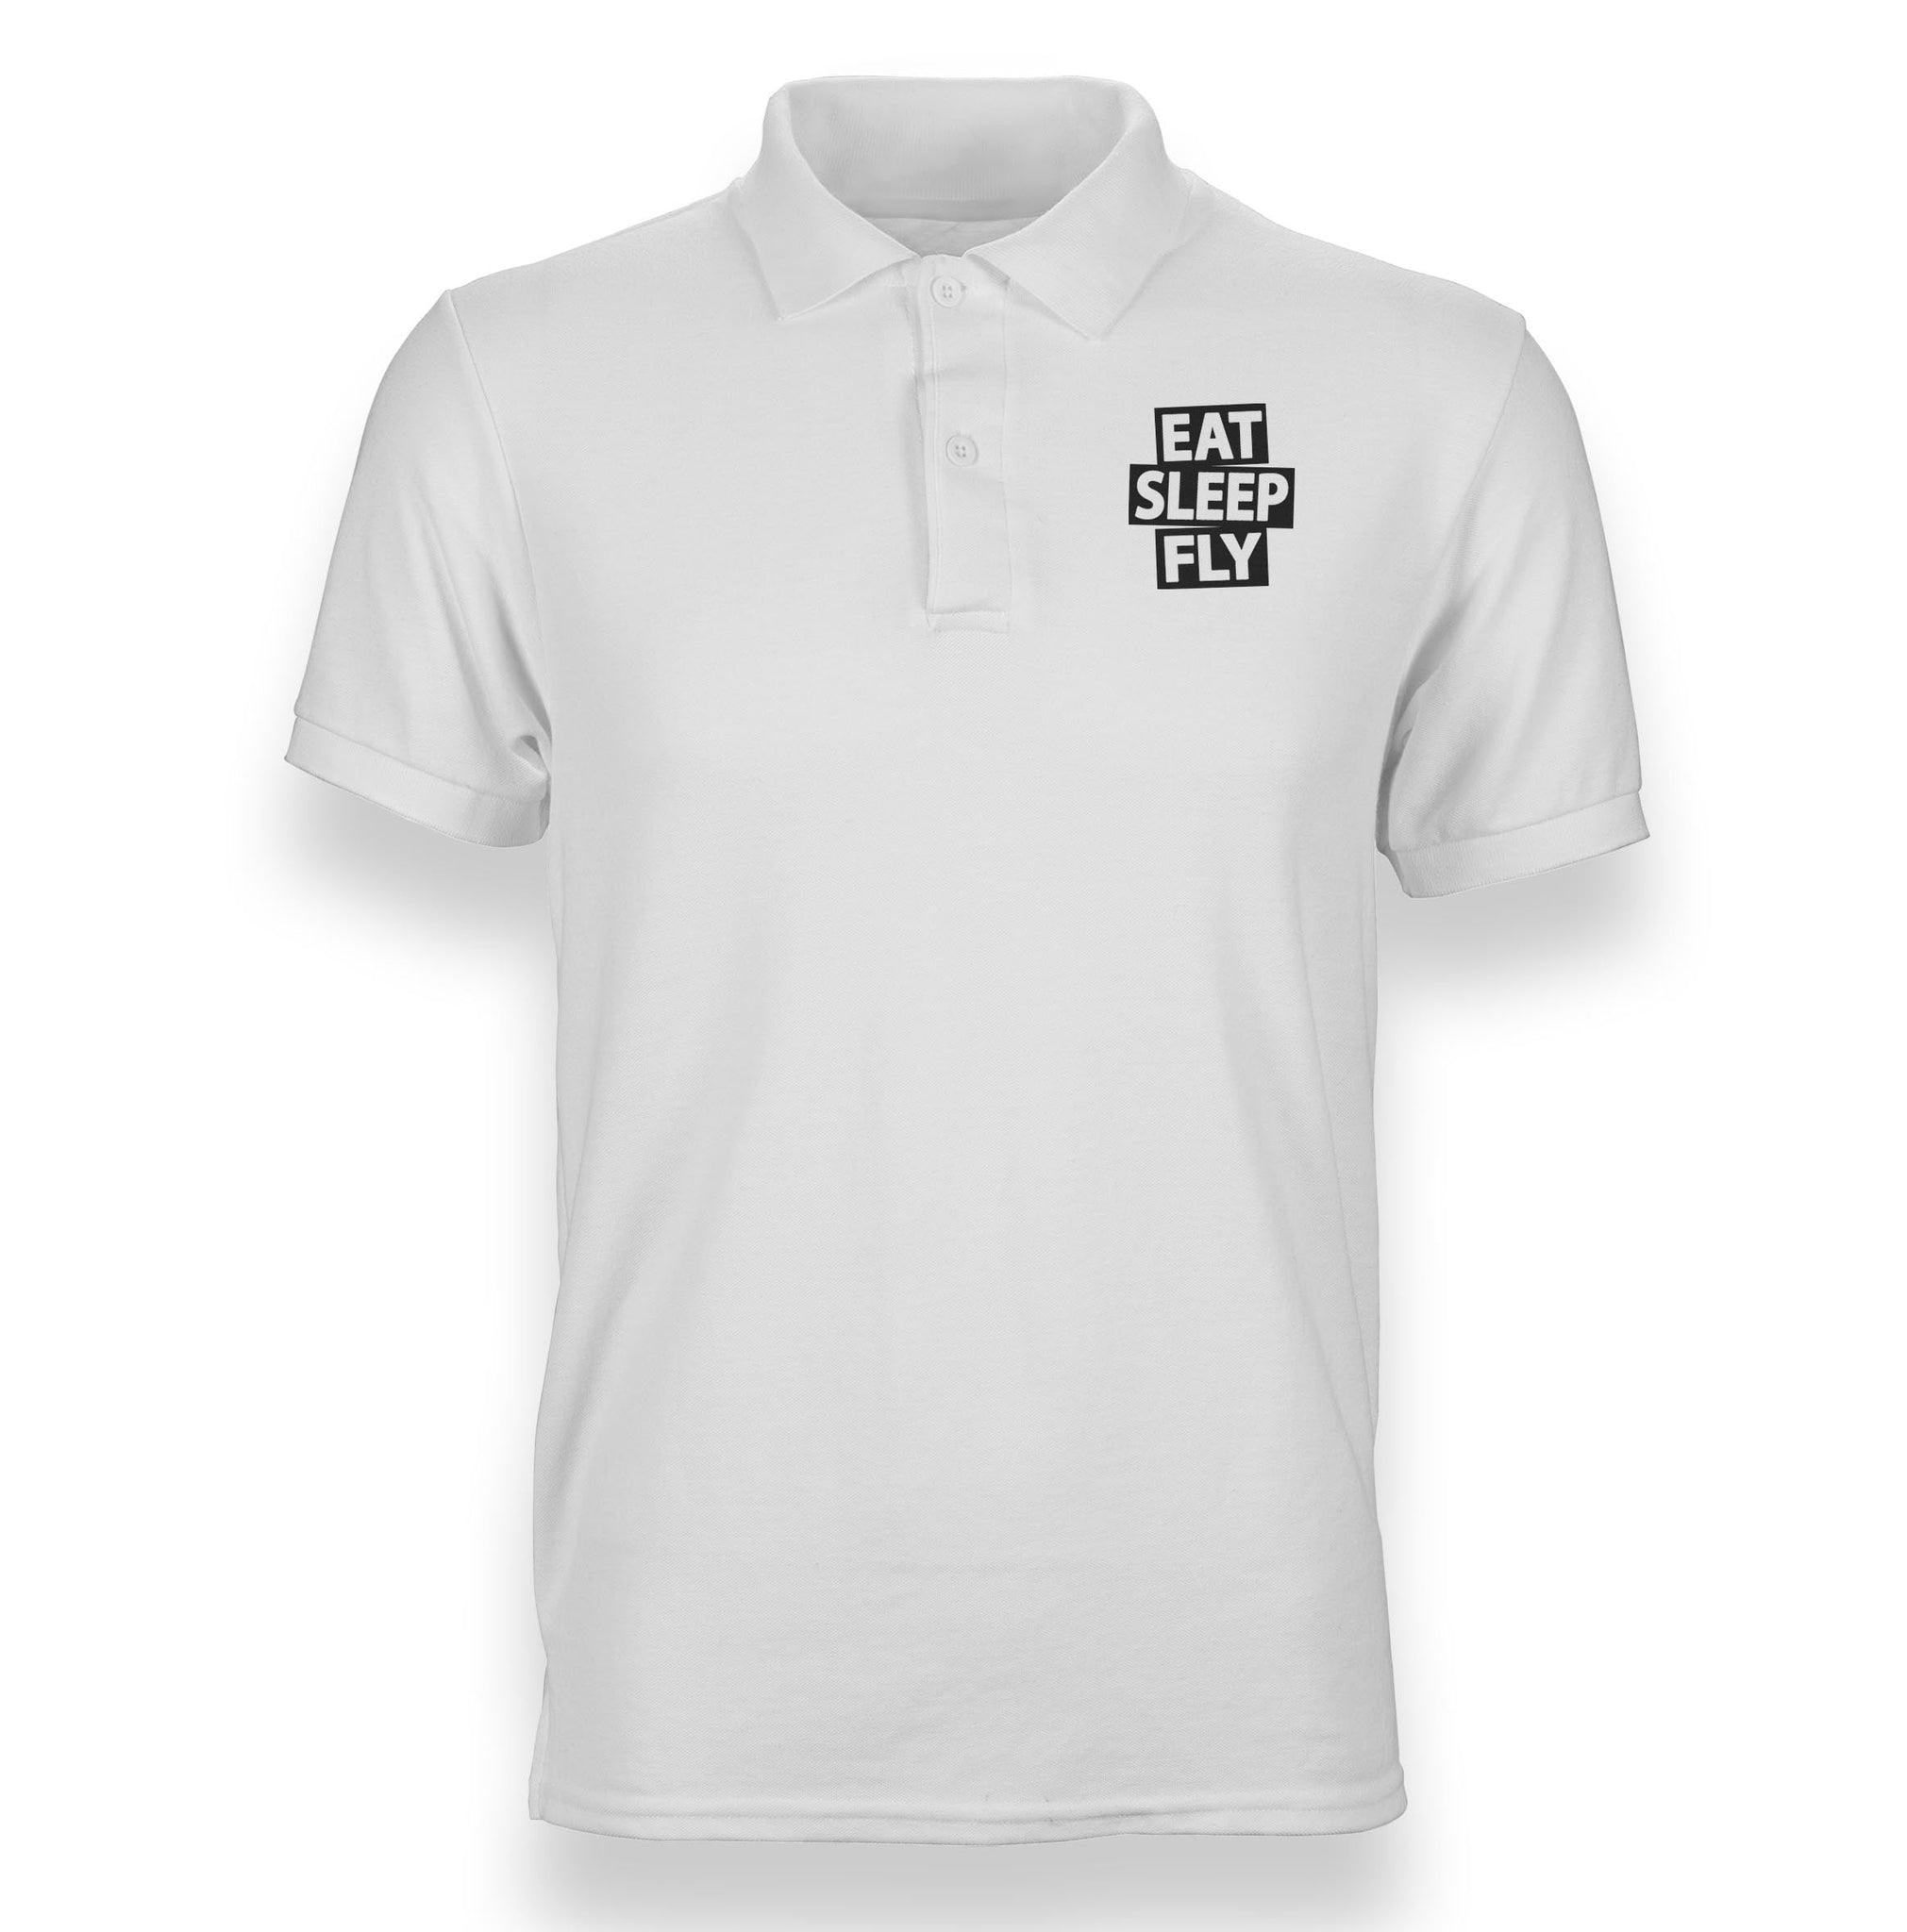 Eat Sleep Fly Designed Polo T-Shirts